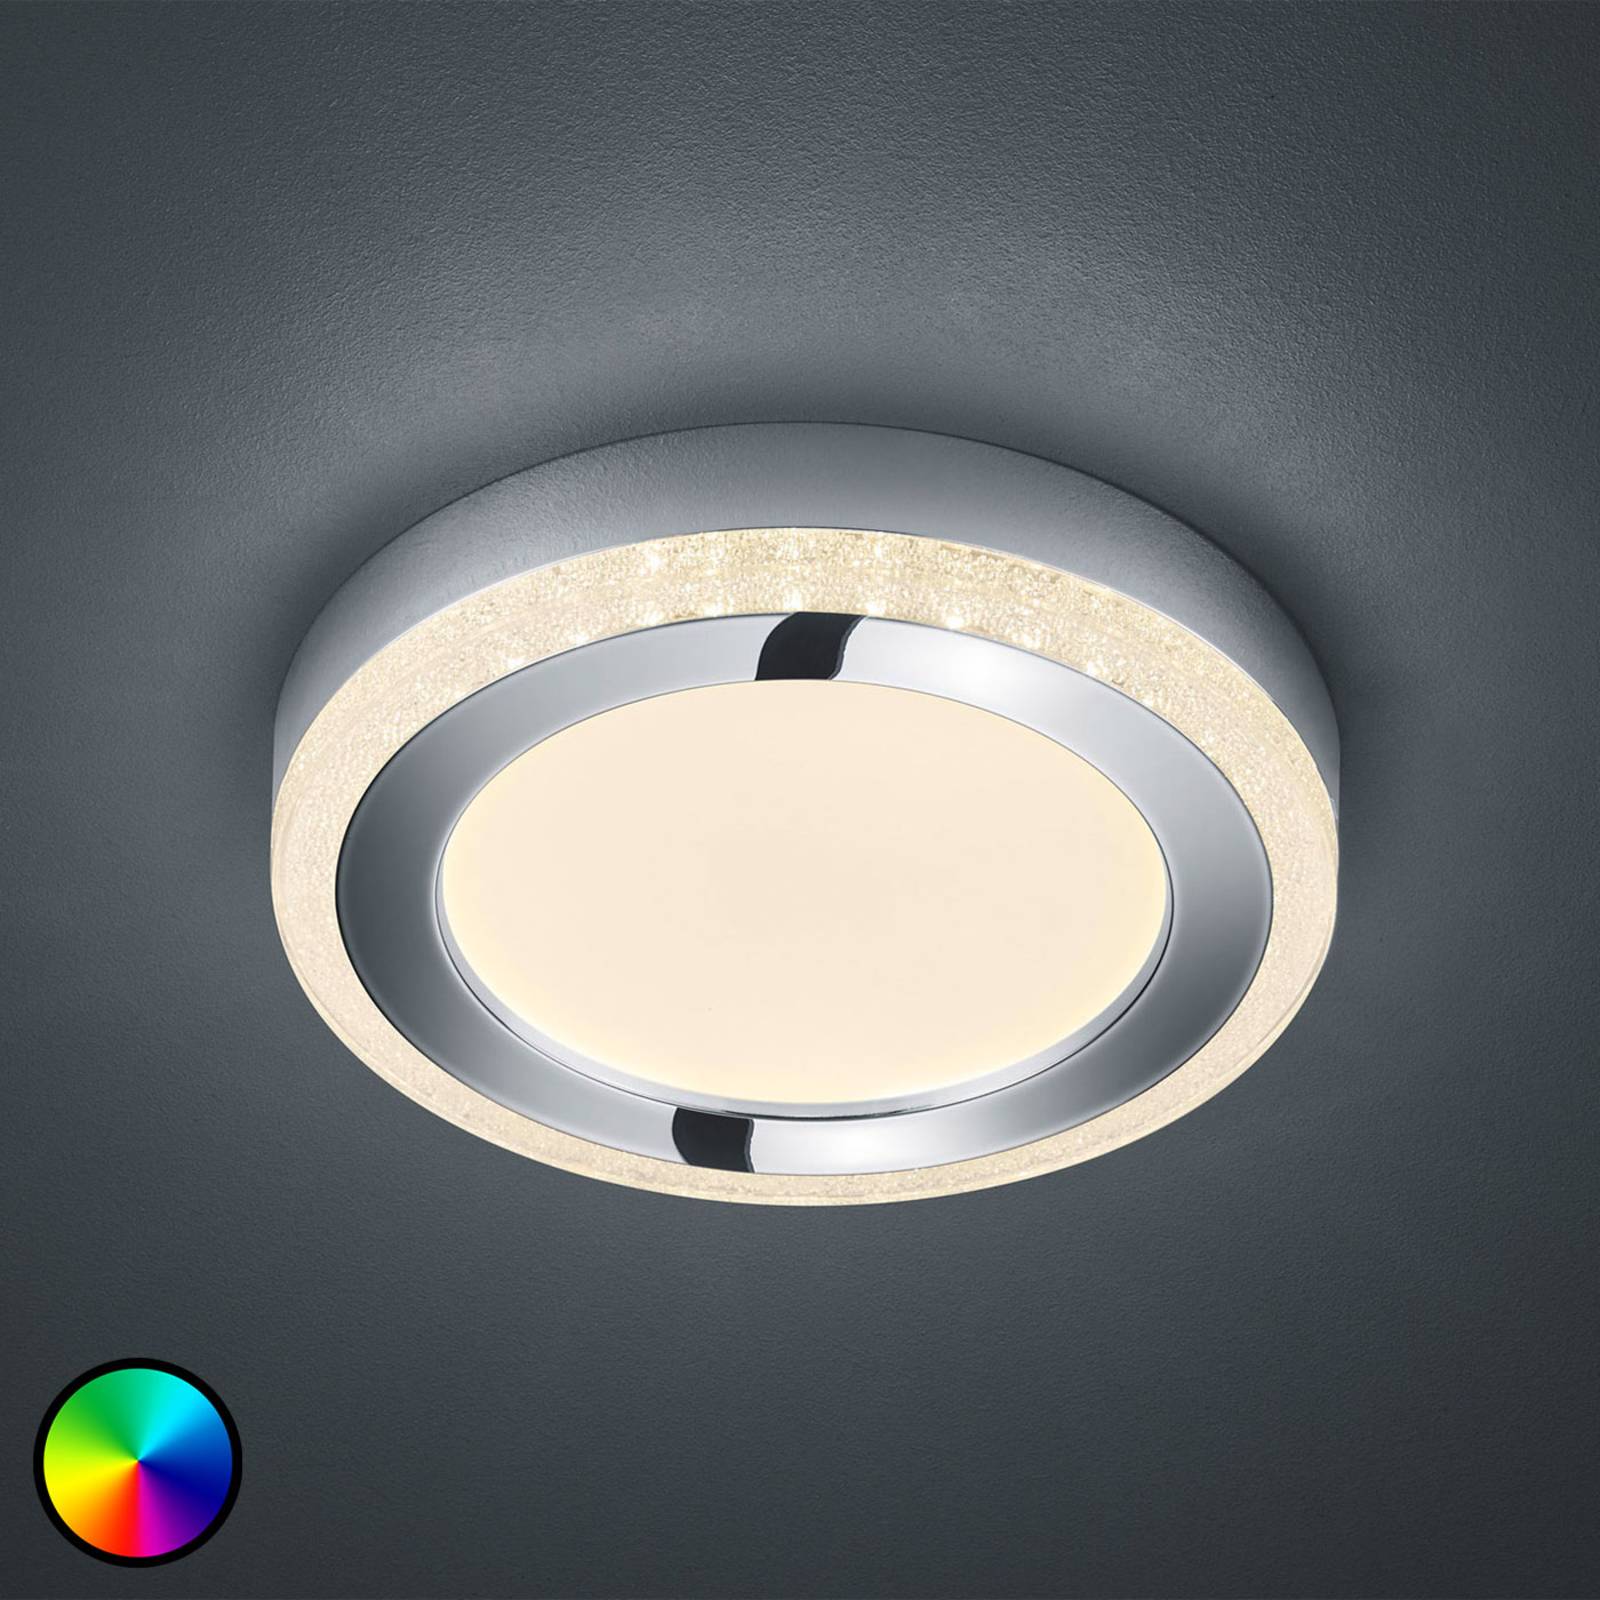 Lampa sufitowa LED Slide, biała, okrągła, Ø 25 cm